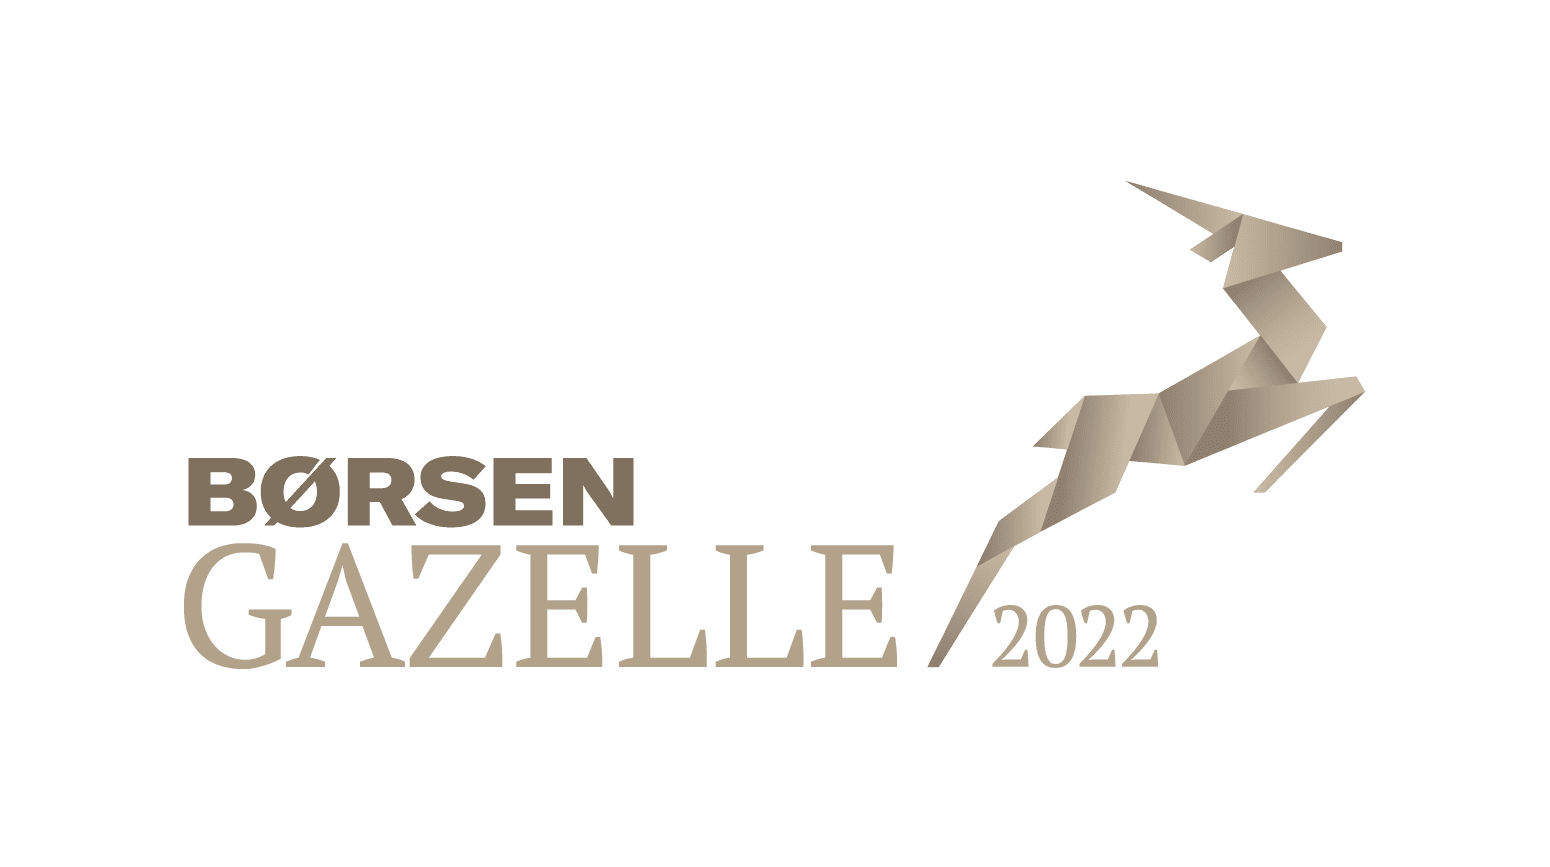 Gazelle 2022 Borsen